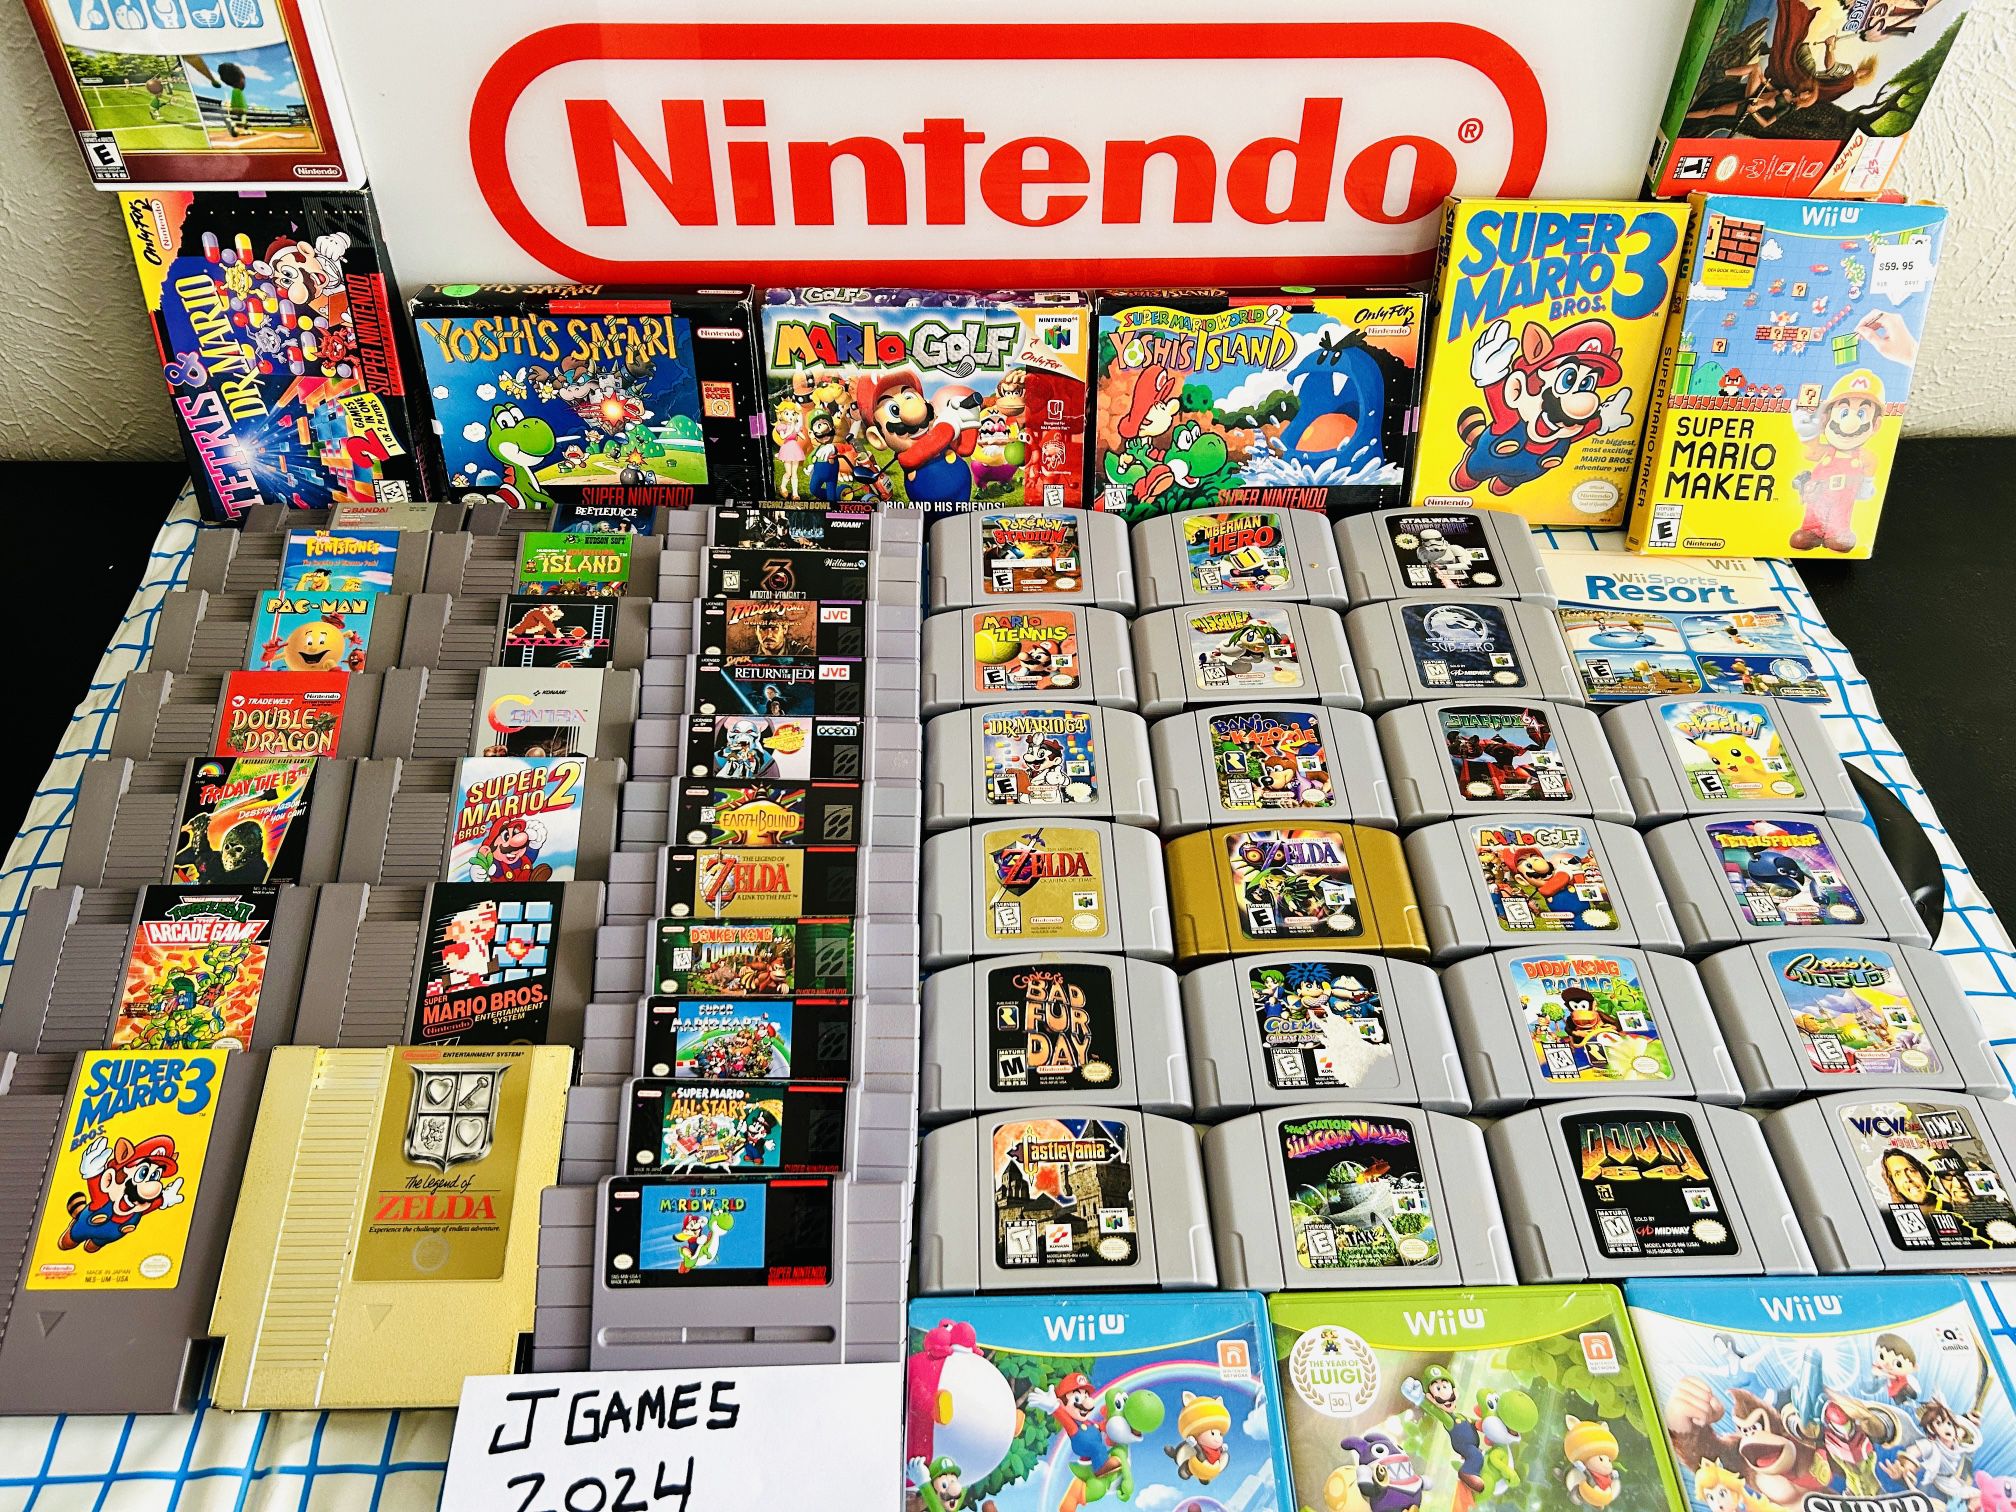 Nintendo NES SNES N64 ( Best Selection In The Basin) Must See